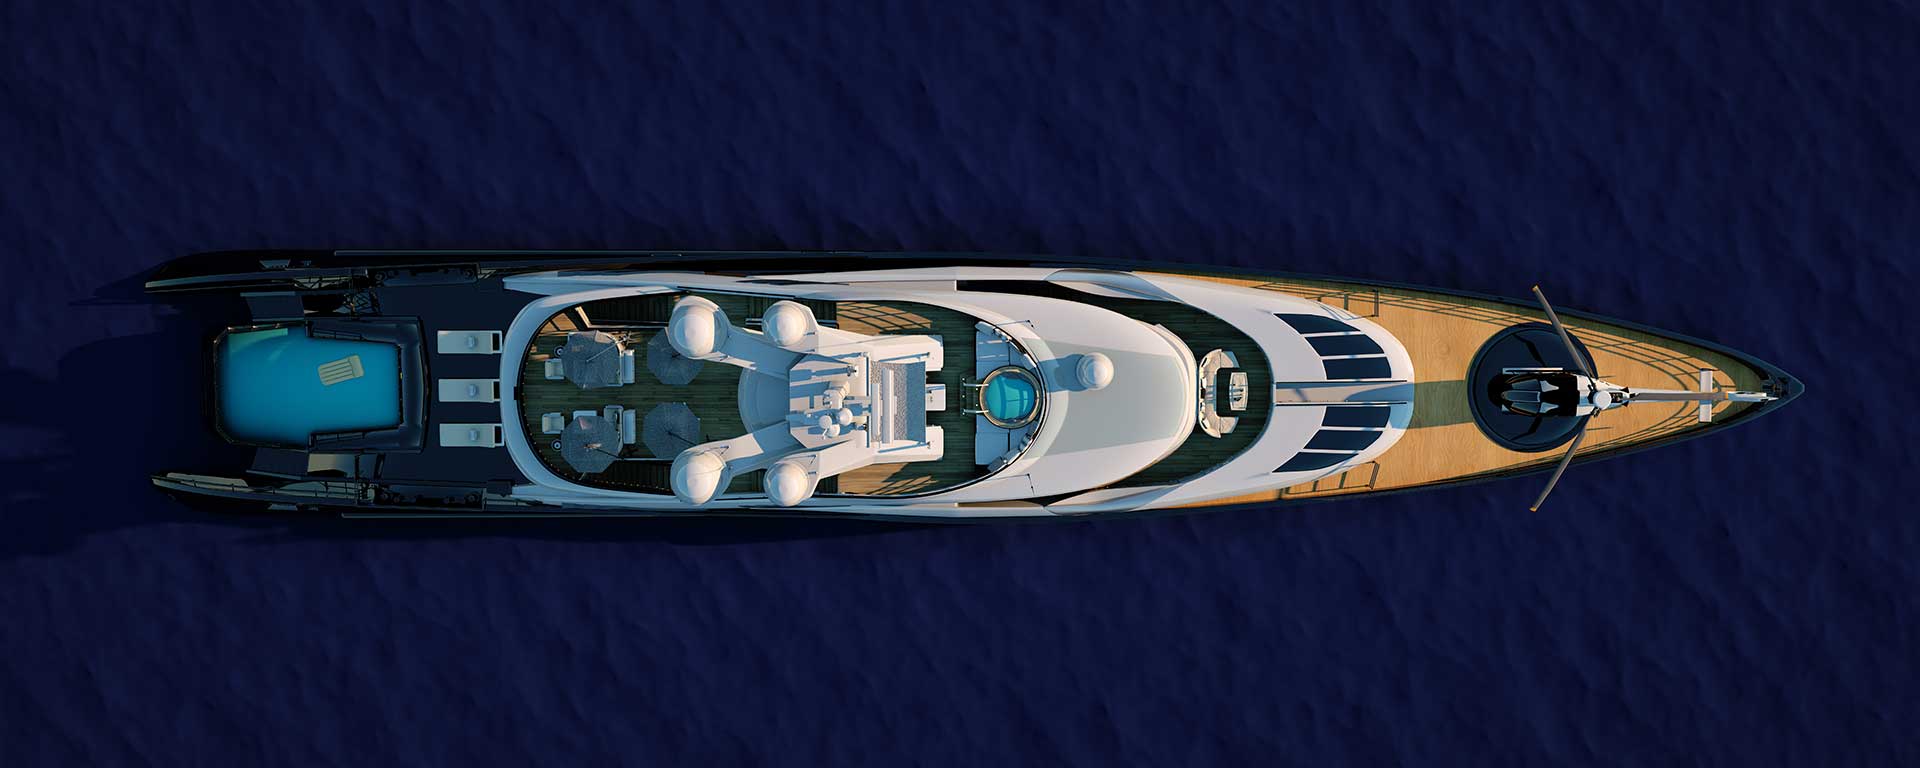 Luxury yacht aerial